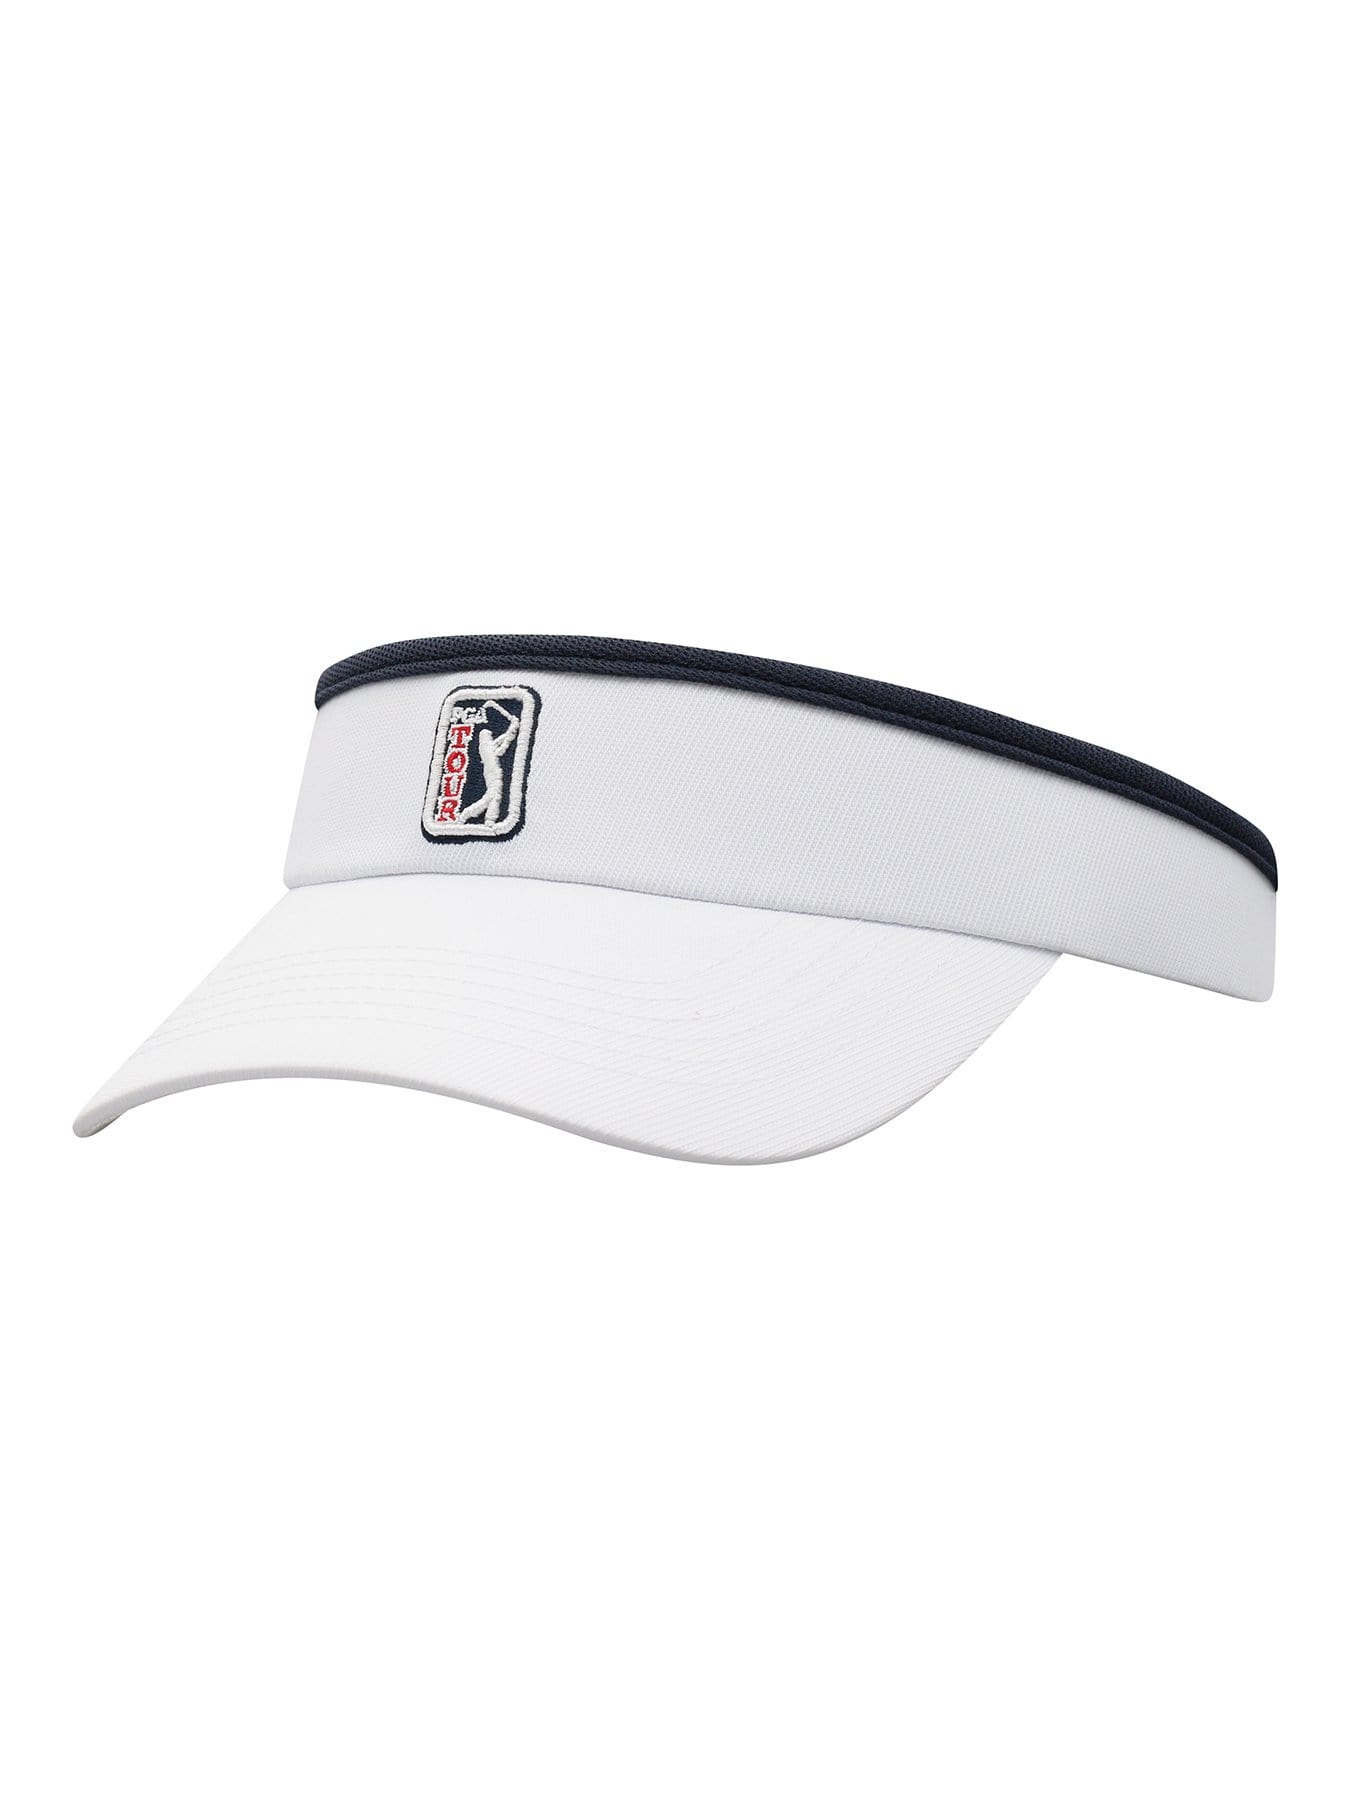 PGA TOUR Apparel Official Logo Tall Adjutsable Visor, White | Golf Apparel Shop